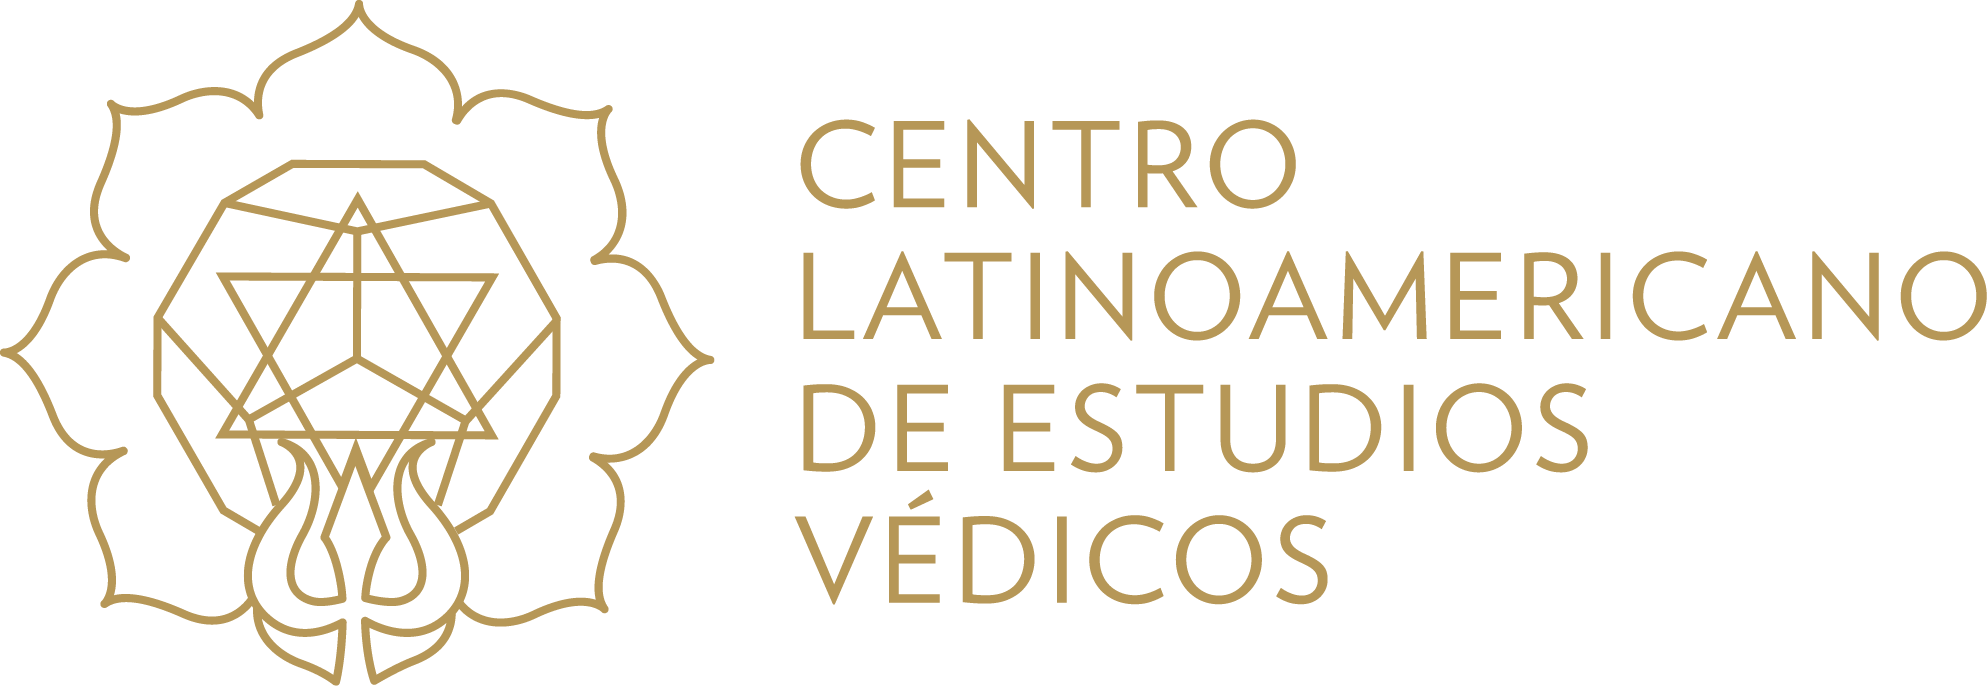 EVD Centro Latinoamericano de Estudios Védicos